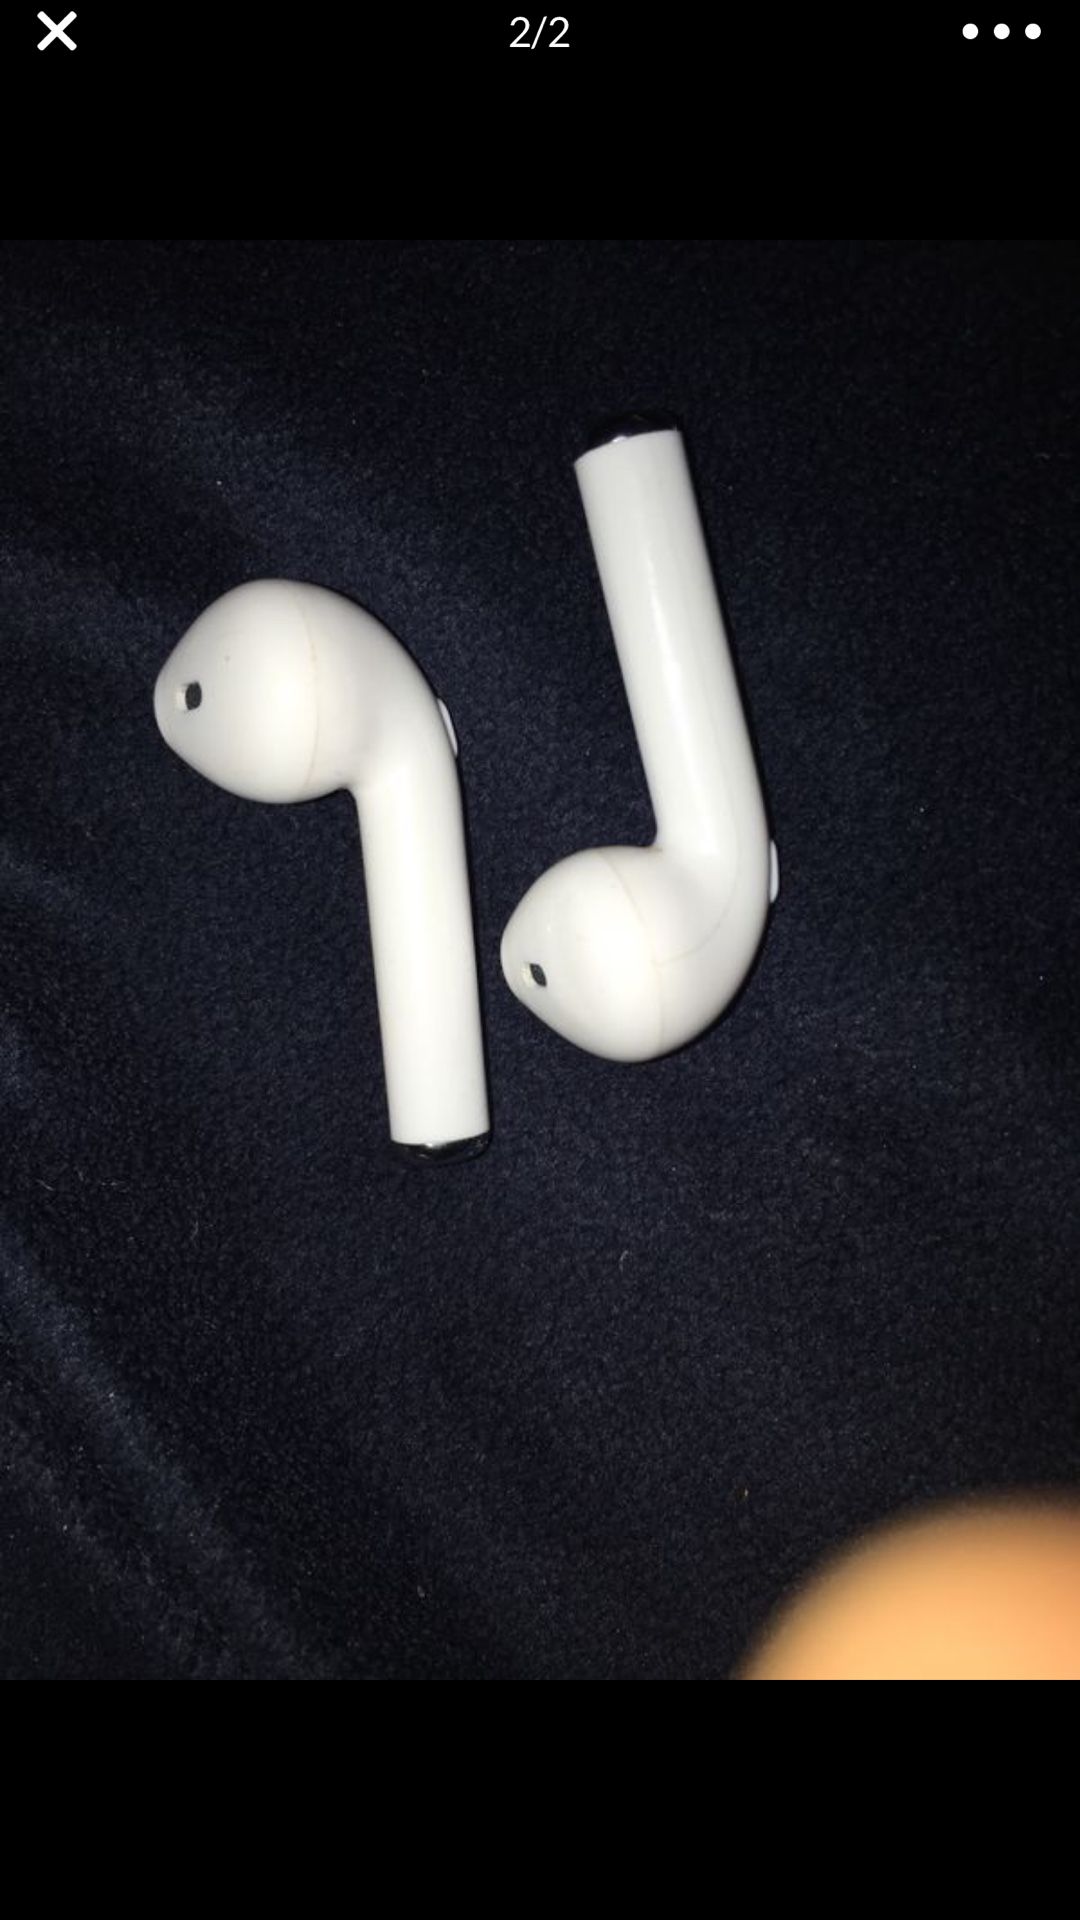 Bluetooth headphones 2 pairs